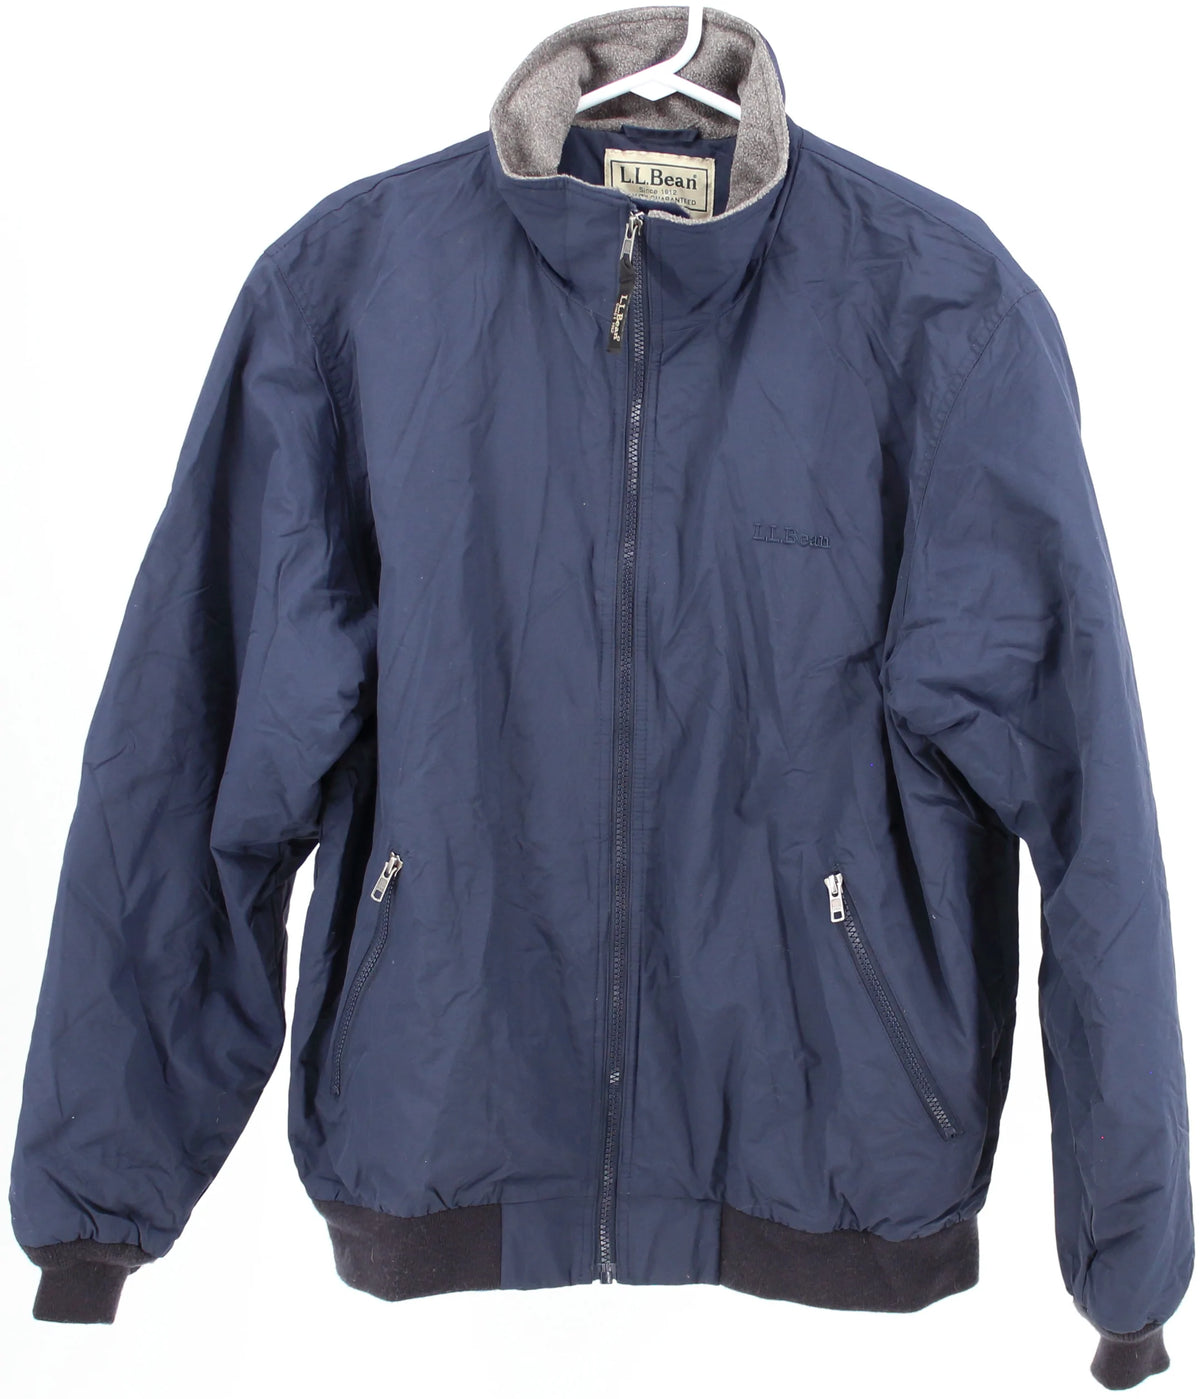 L.L.Bean Navy Blue Nylon Jacket With Fleece Lining